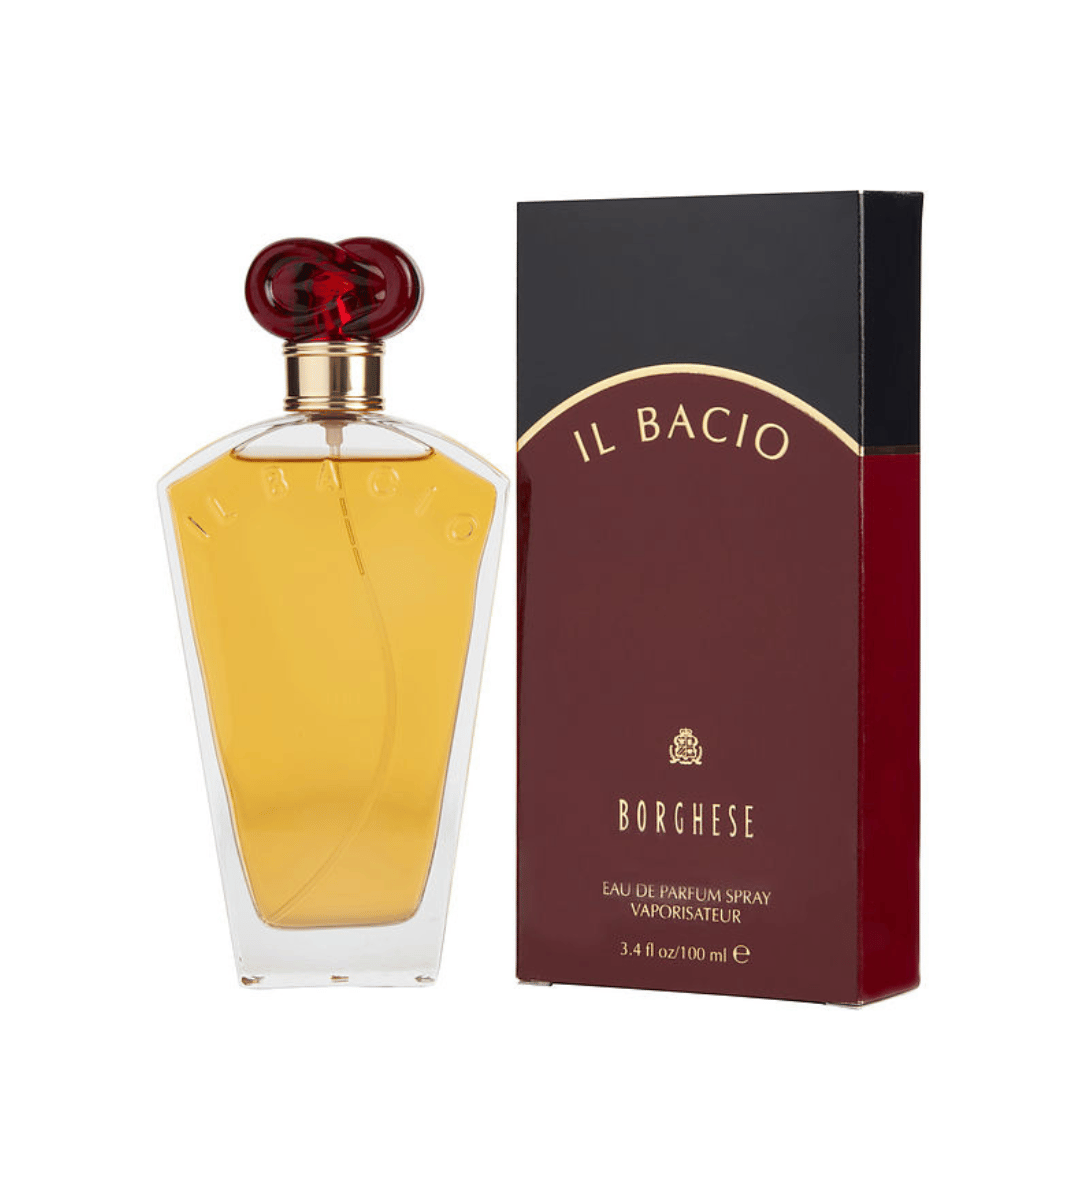 IL Bacio by Marcella Borghese Eau de Parfum